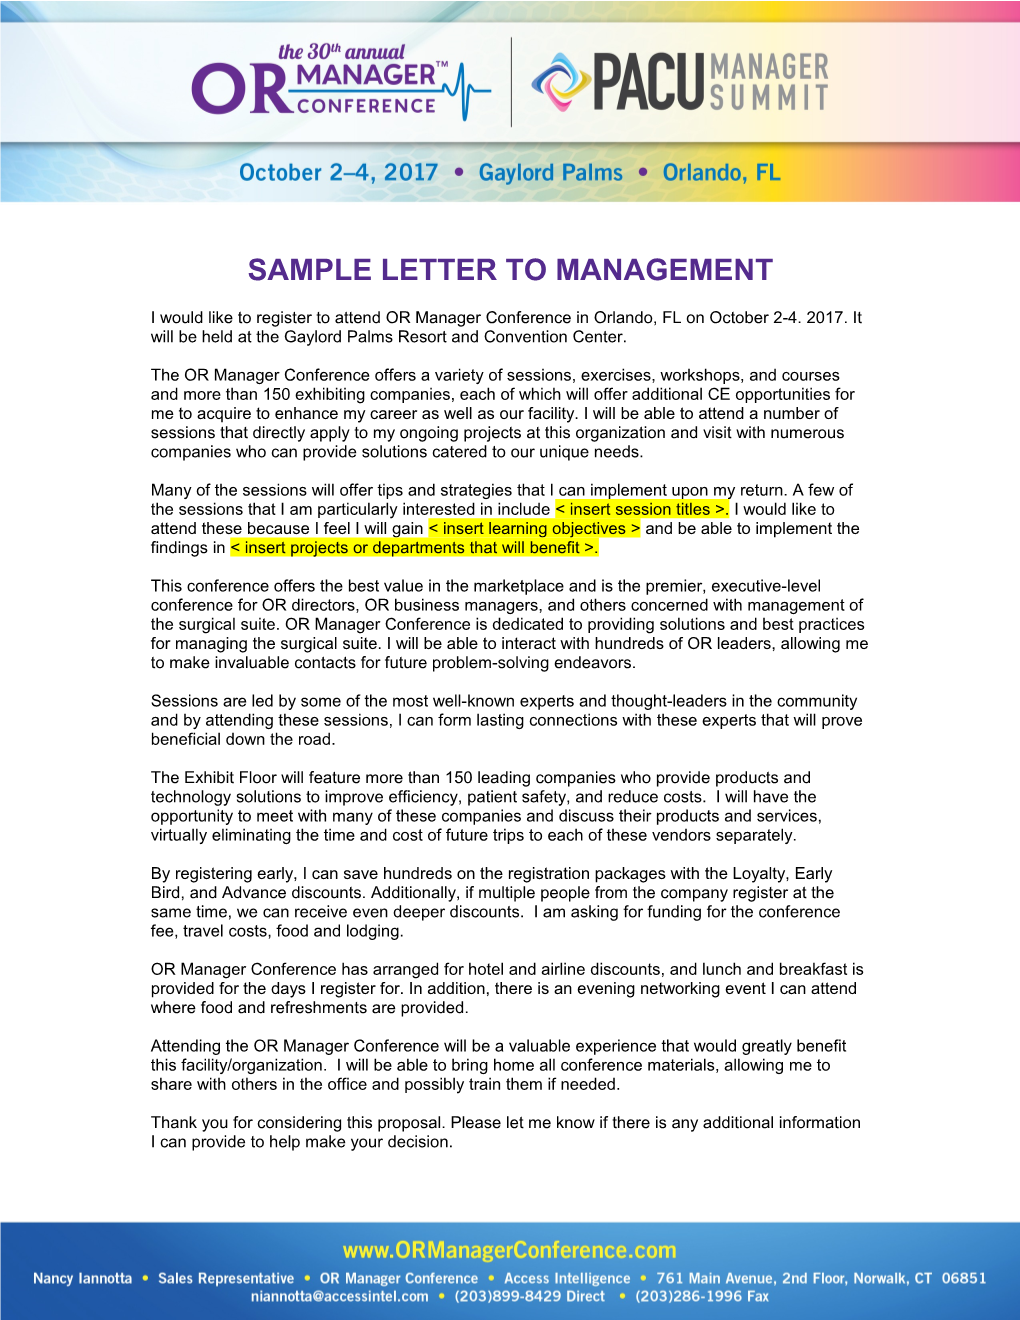 Sample Letter to Management